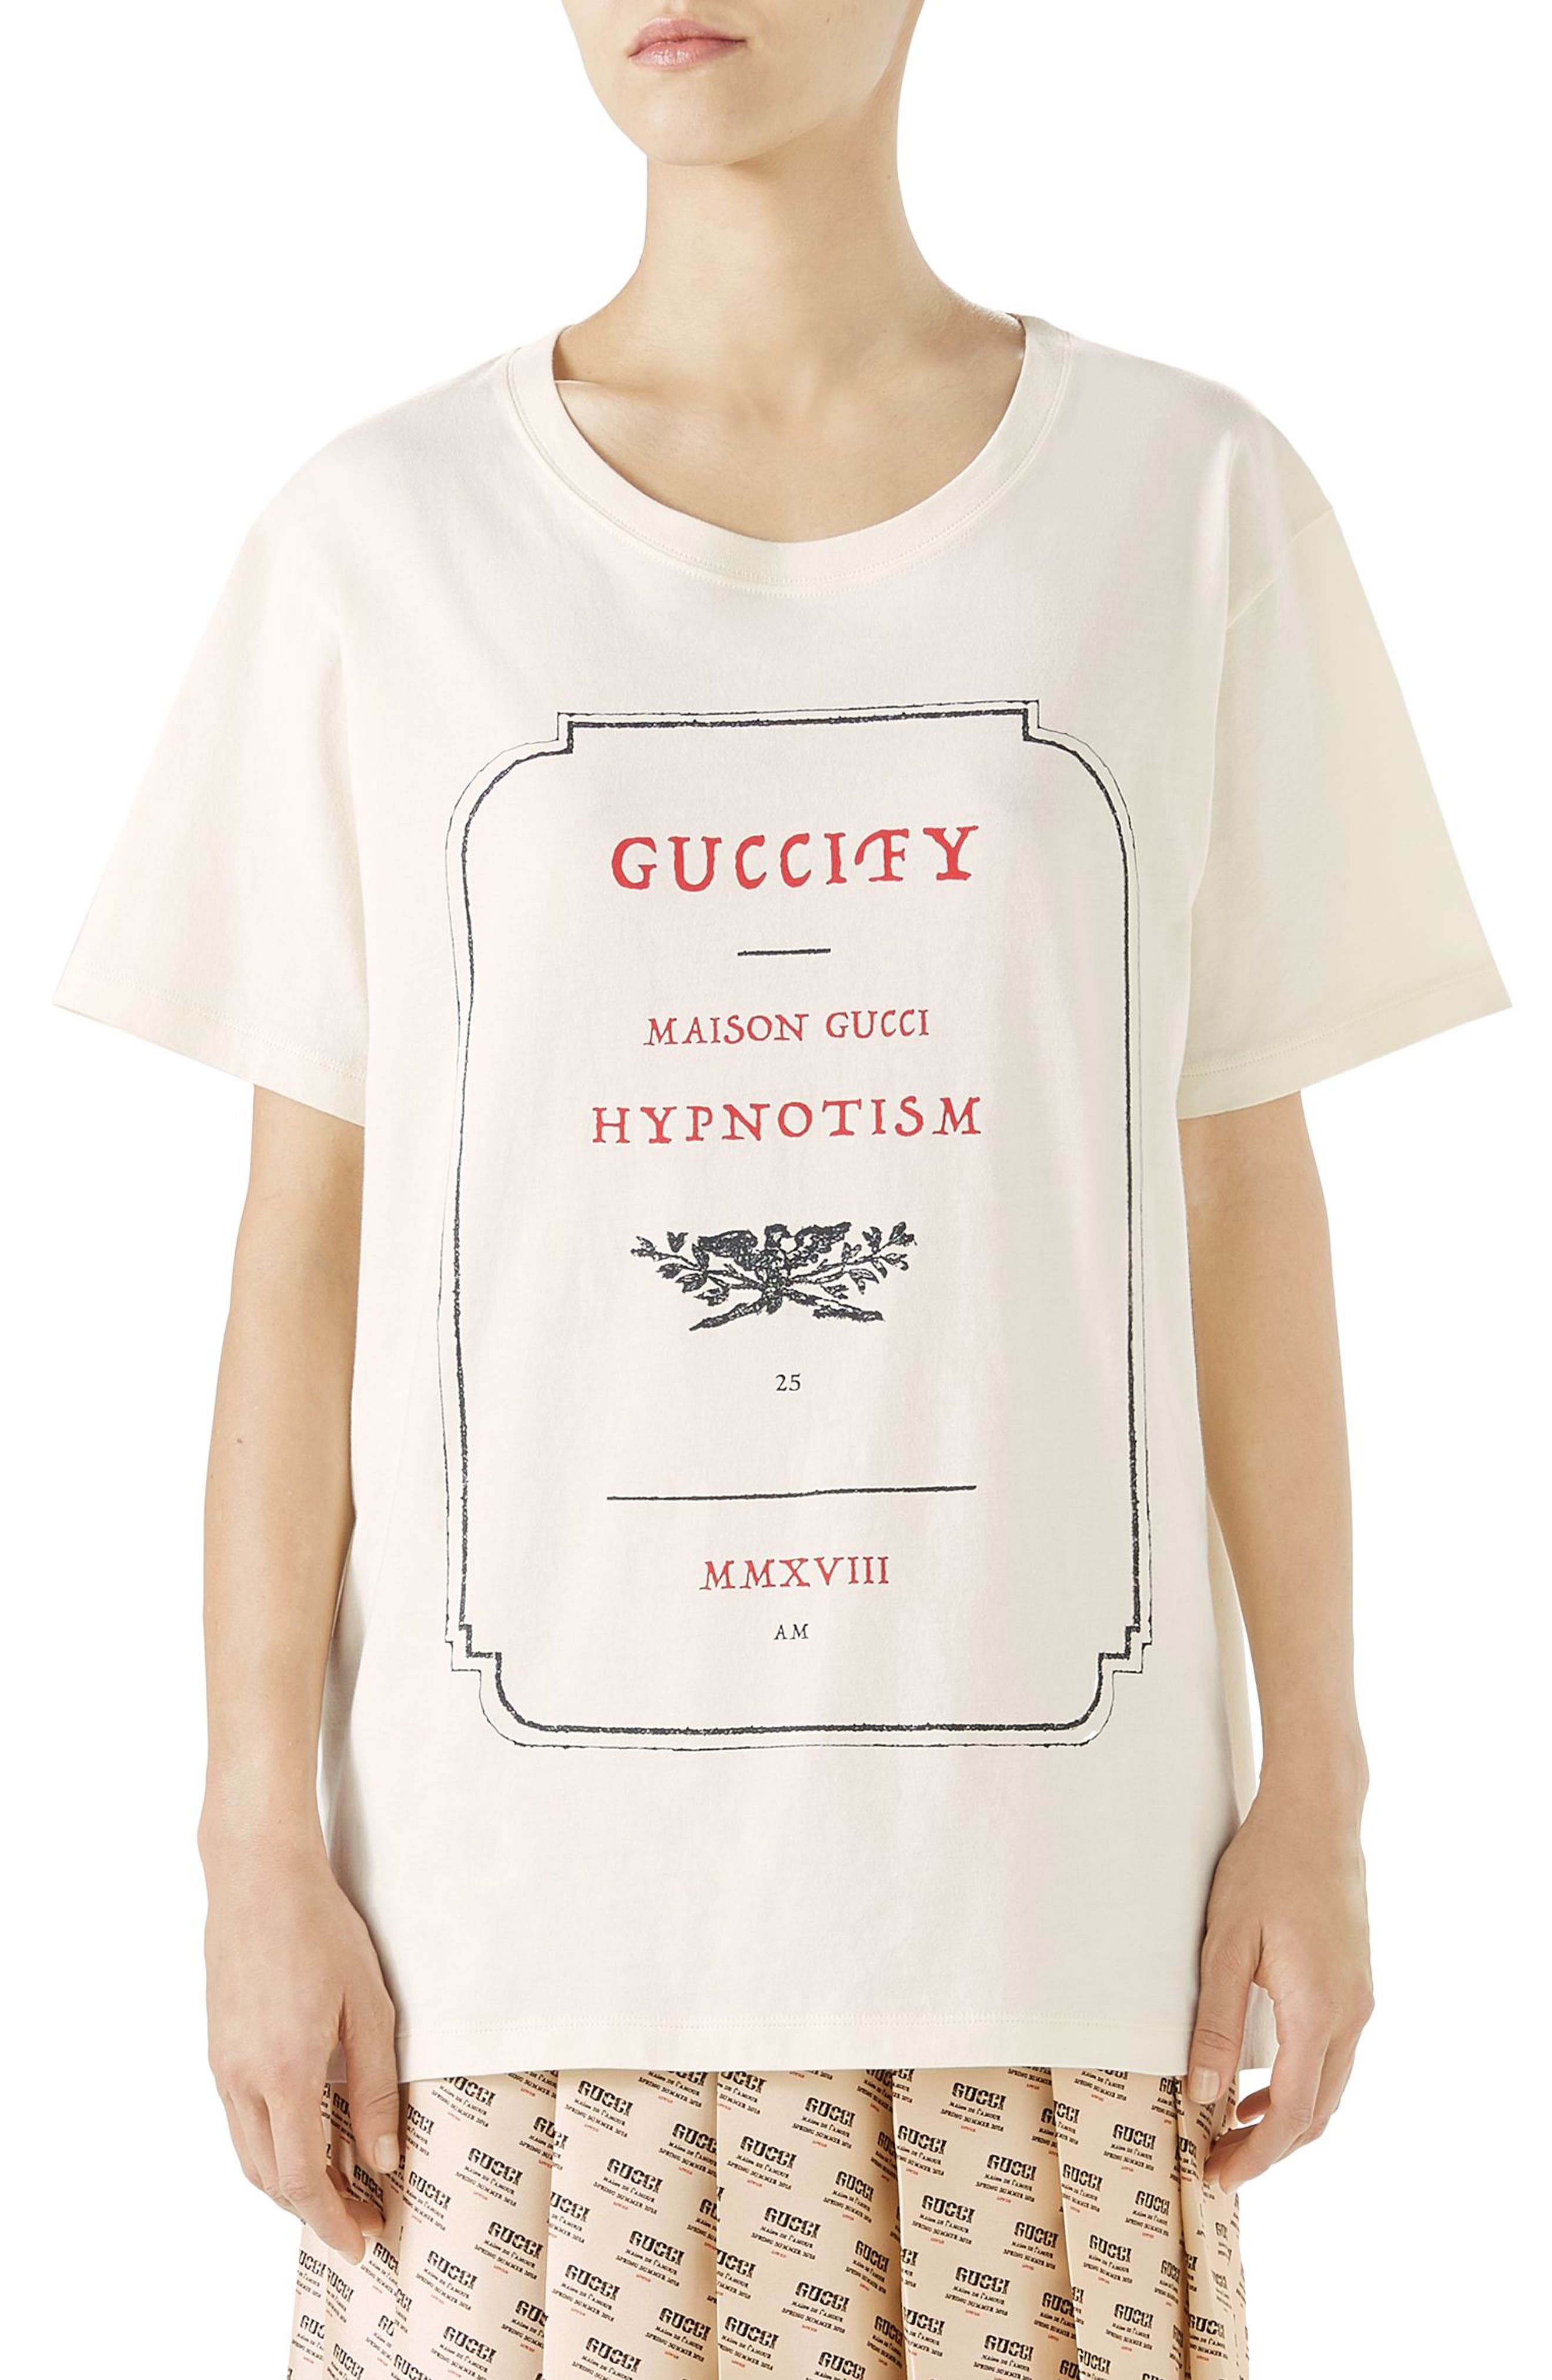 guccify hypnotism shirt